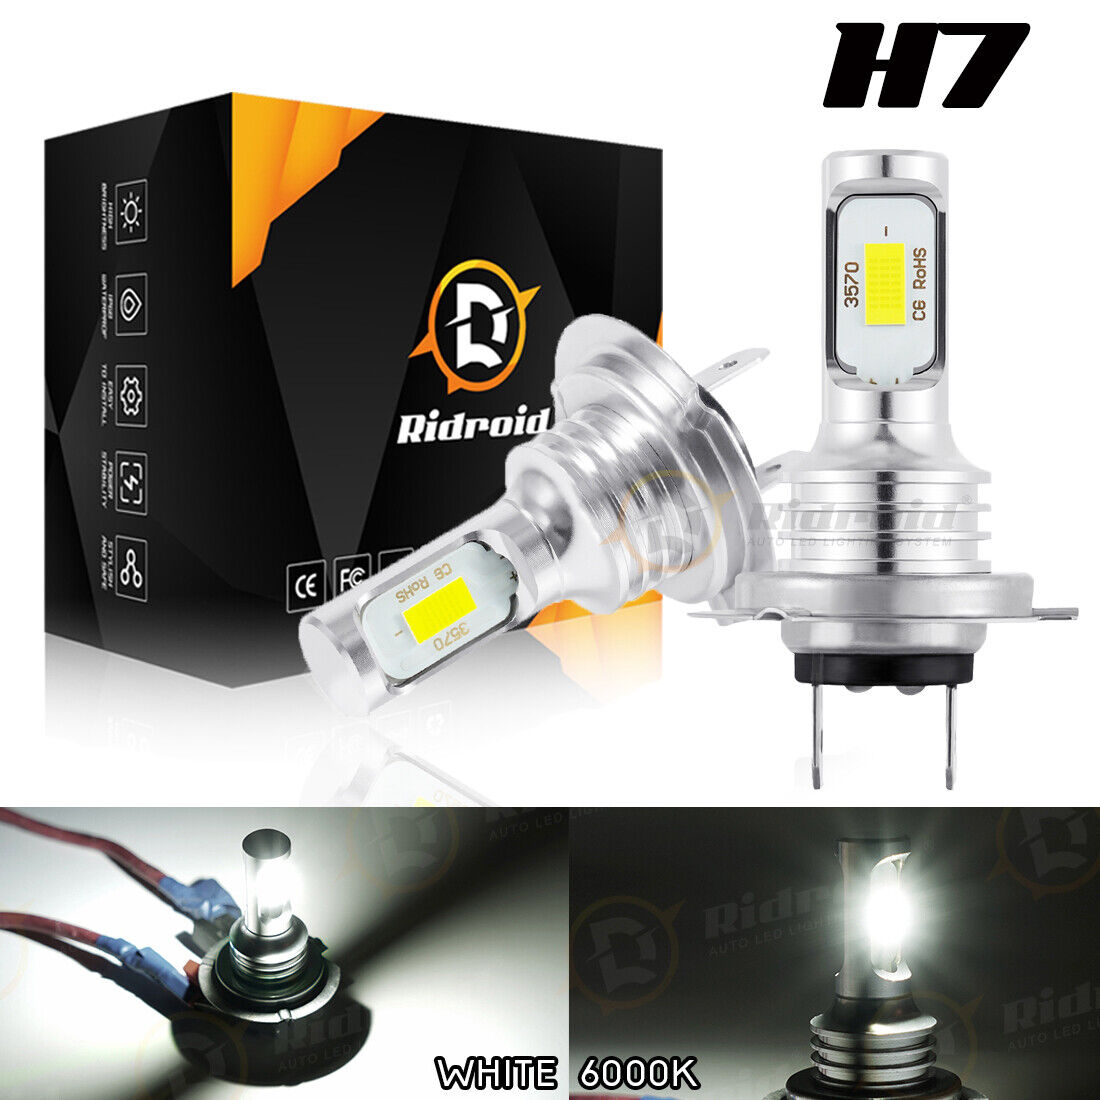 2 LED Headlight Bulbs Conversion Kit H7 High Low Beam Headlamp 6000K Super White Ridroid RDDDWDH7